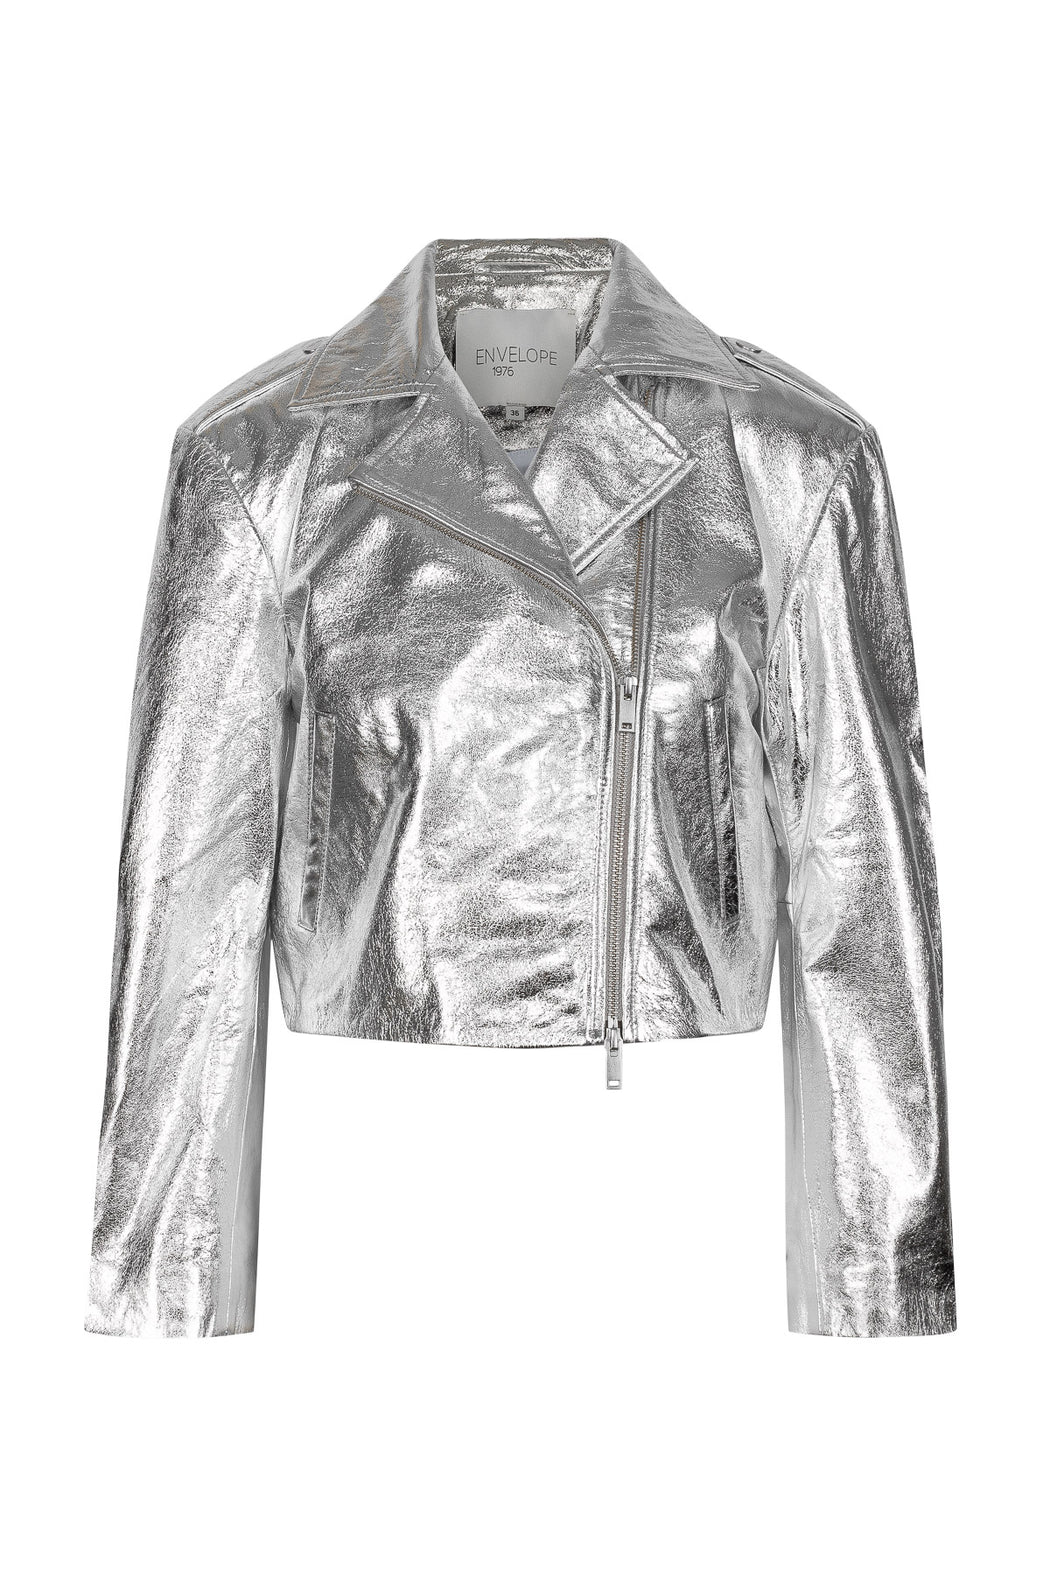 Envelope1976 Petit biker jacket - Leather Jacket Silver